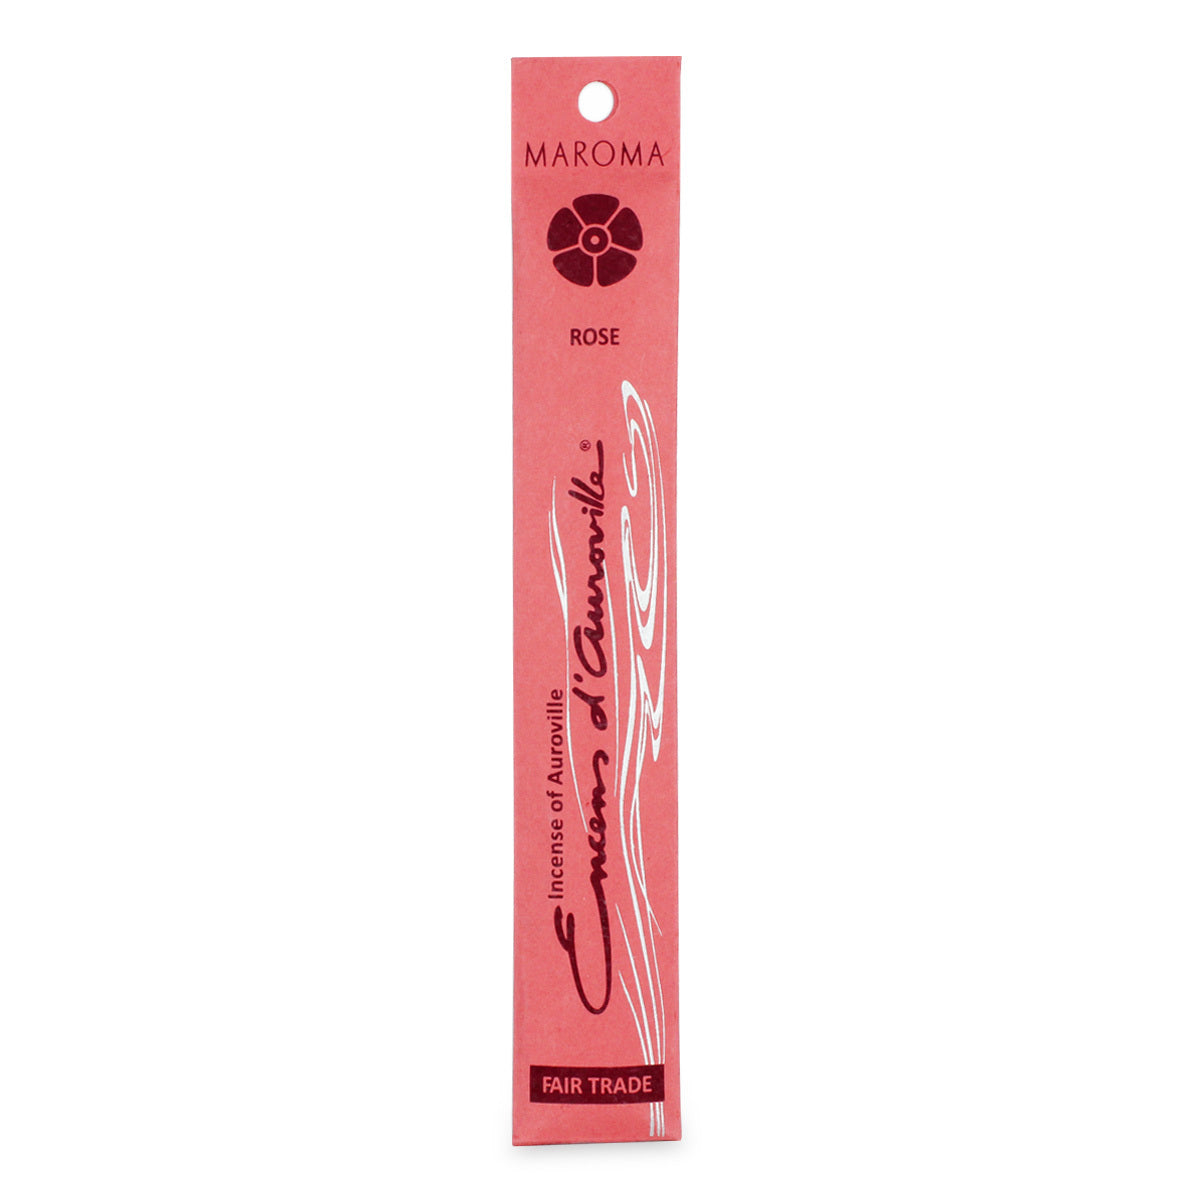 Primary image of EDA Rose Incense